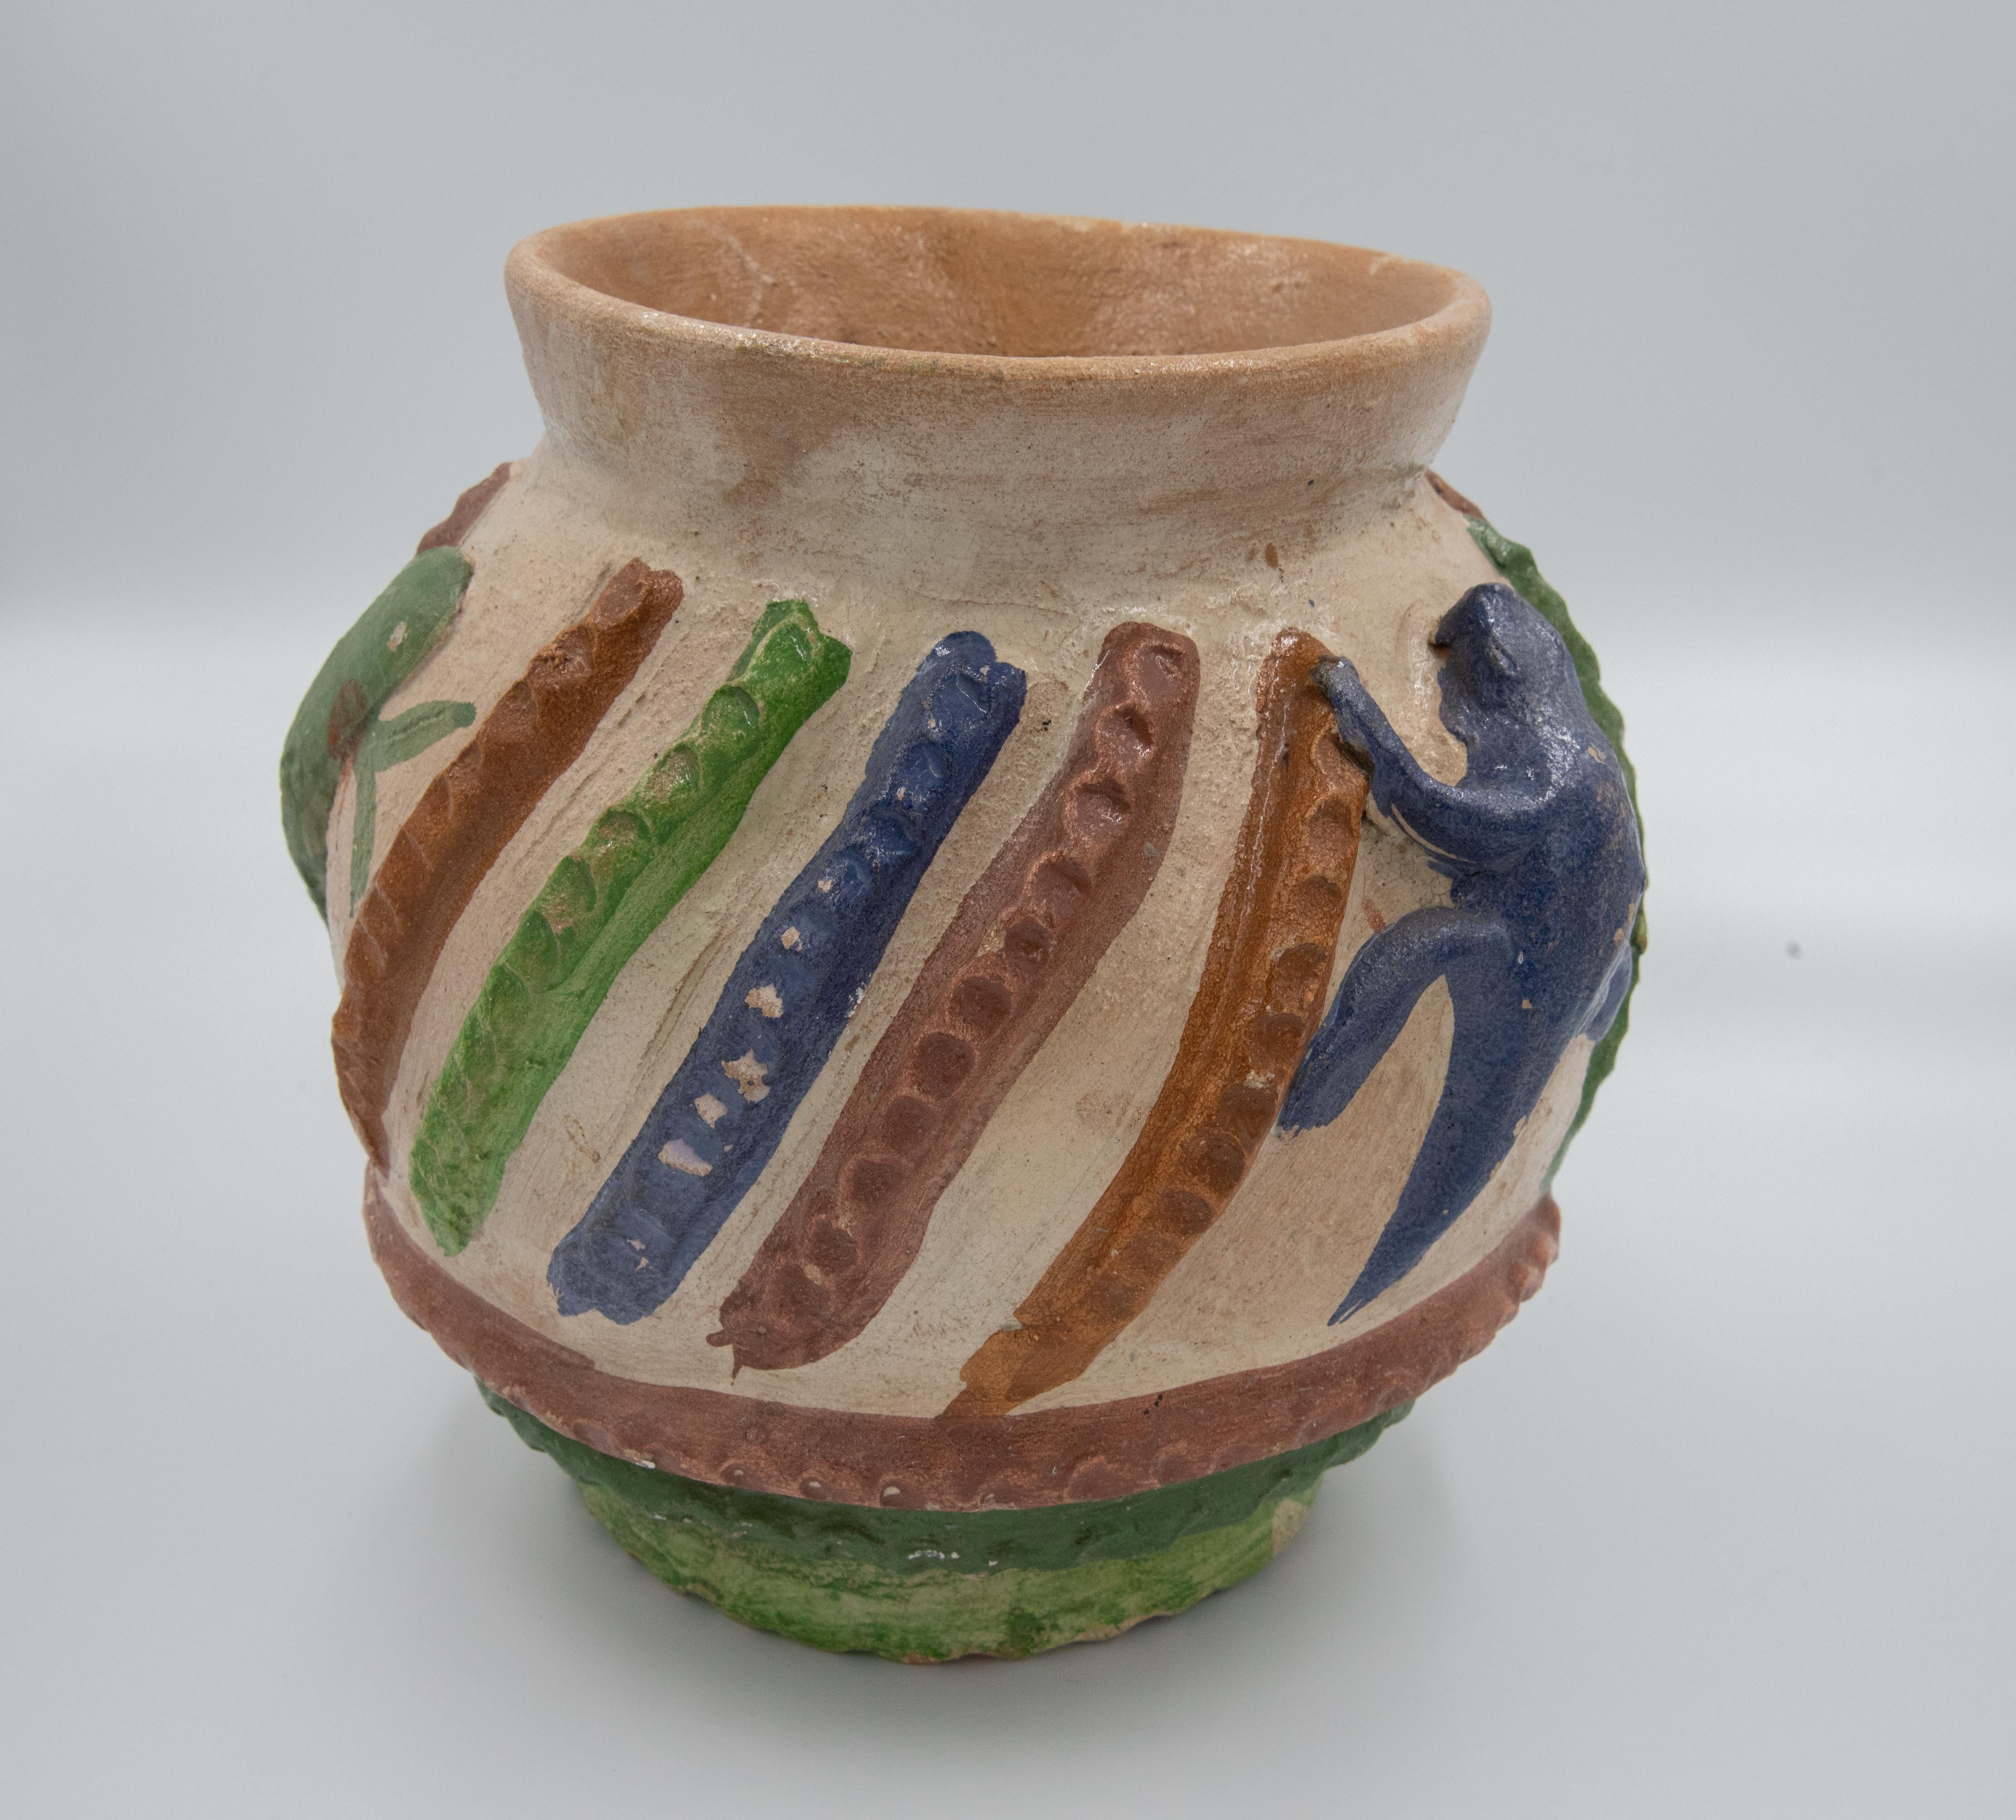 dolores porras pottery for sale